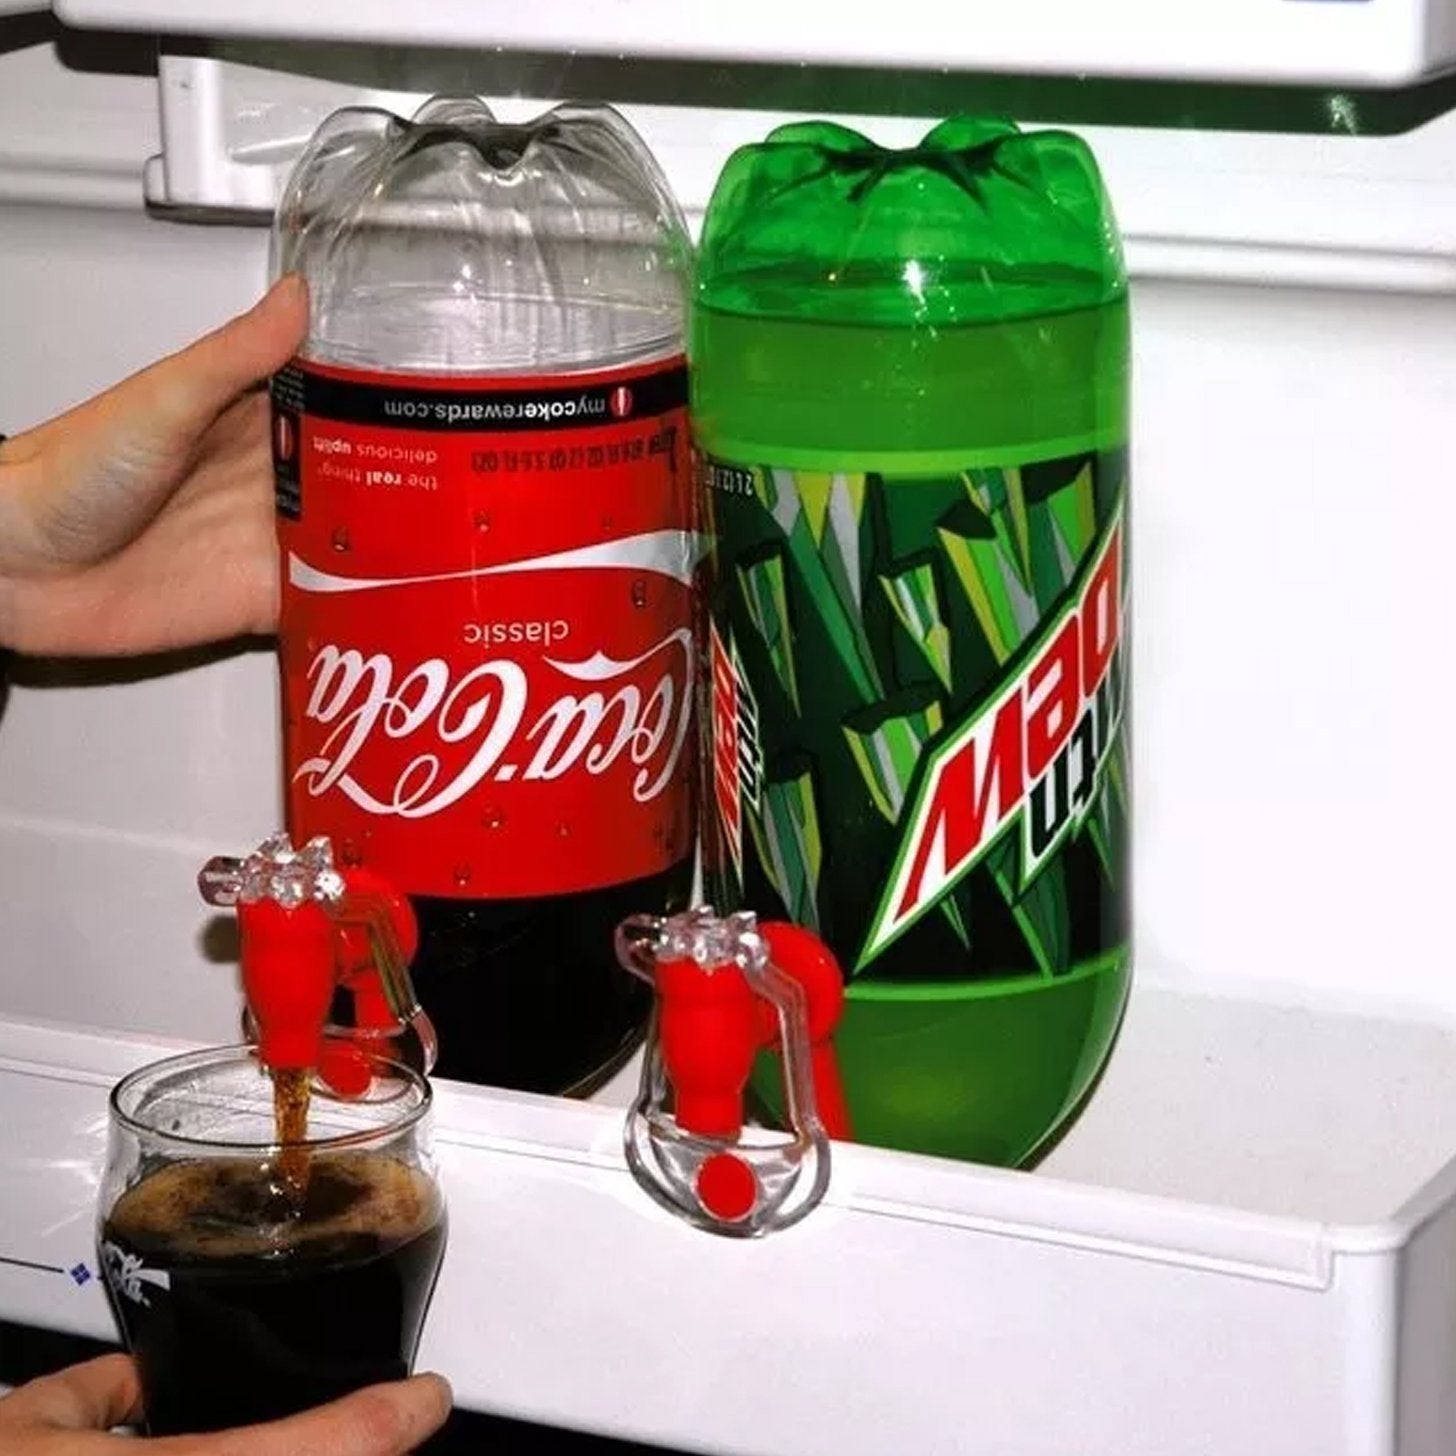 Party Soda Dispenser